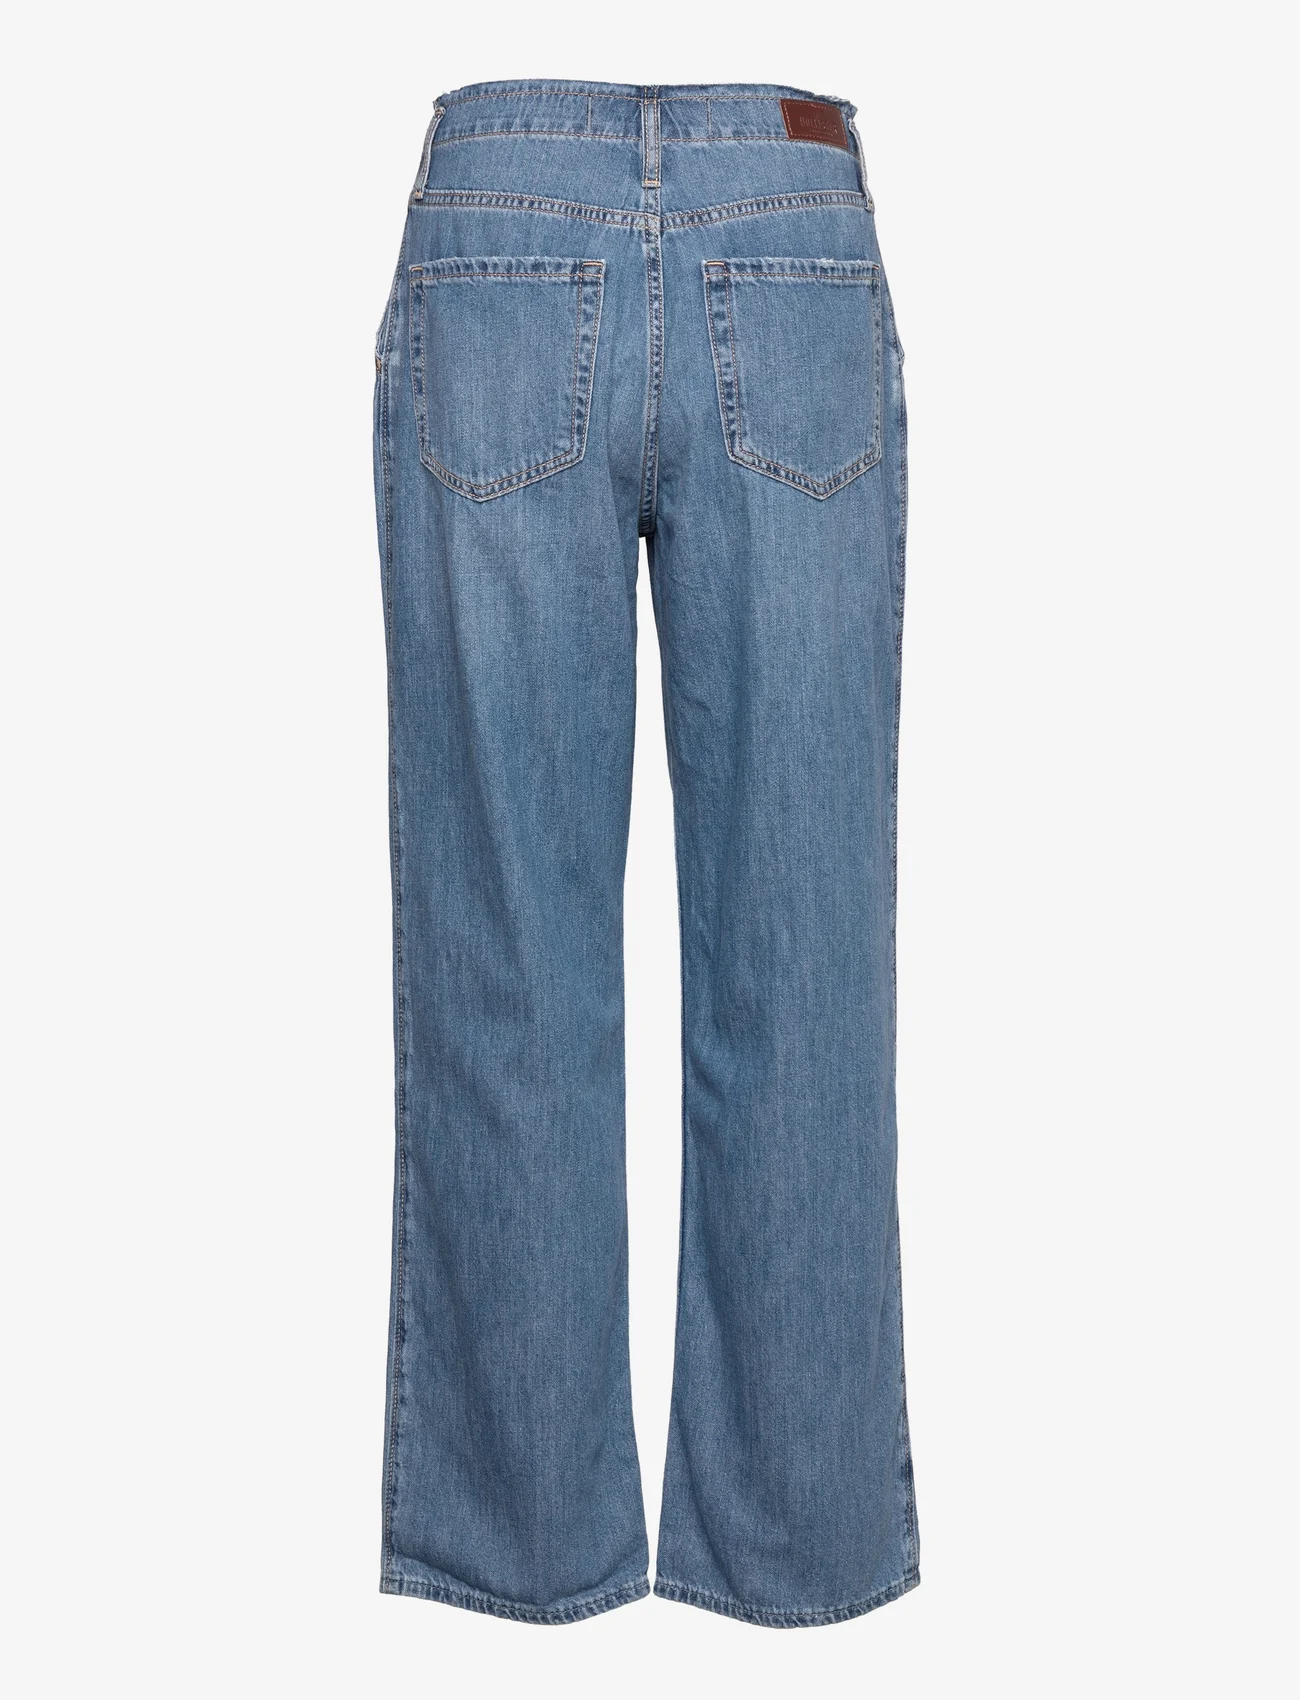 Hollister - HCo. GIRLS JEANS - vide jeans - ultra high rise lightweight medium clean dad jean - 1